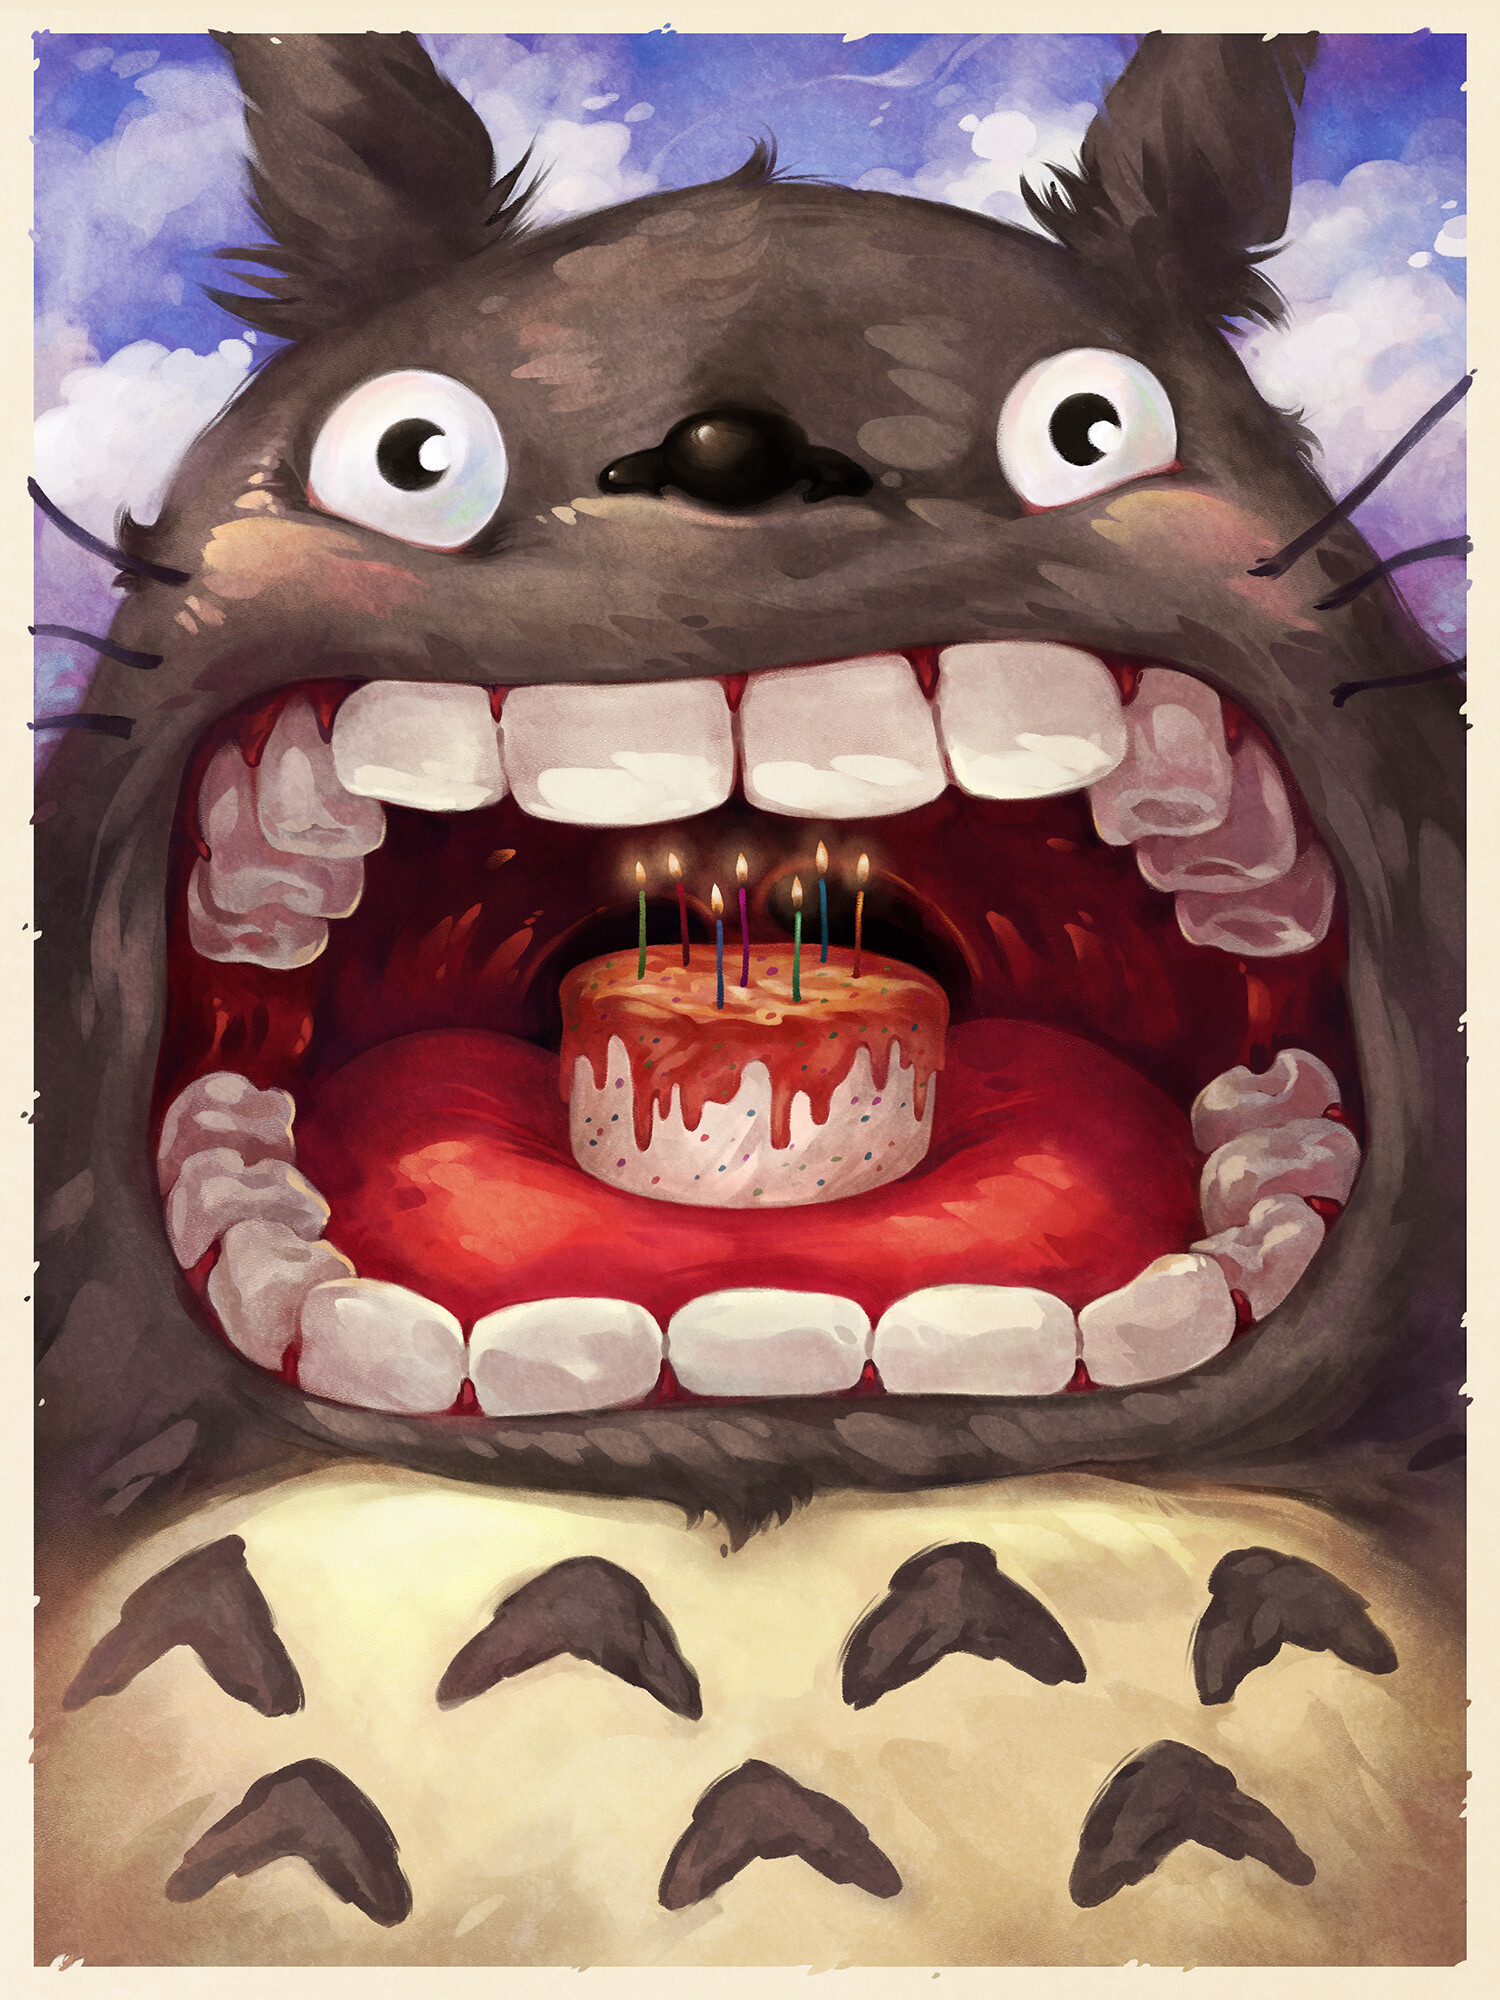 Totoro happy birthday